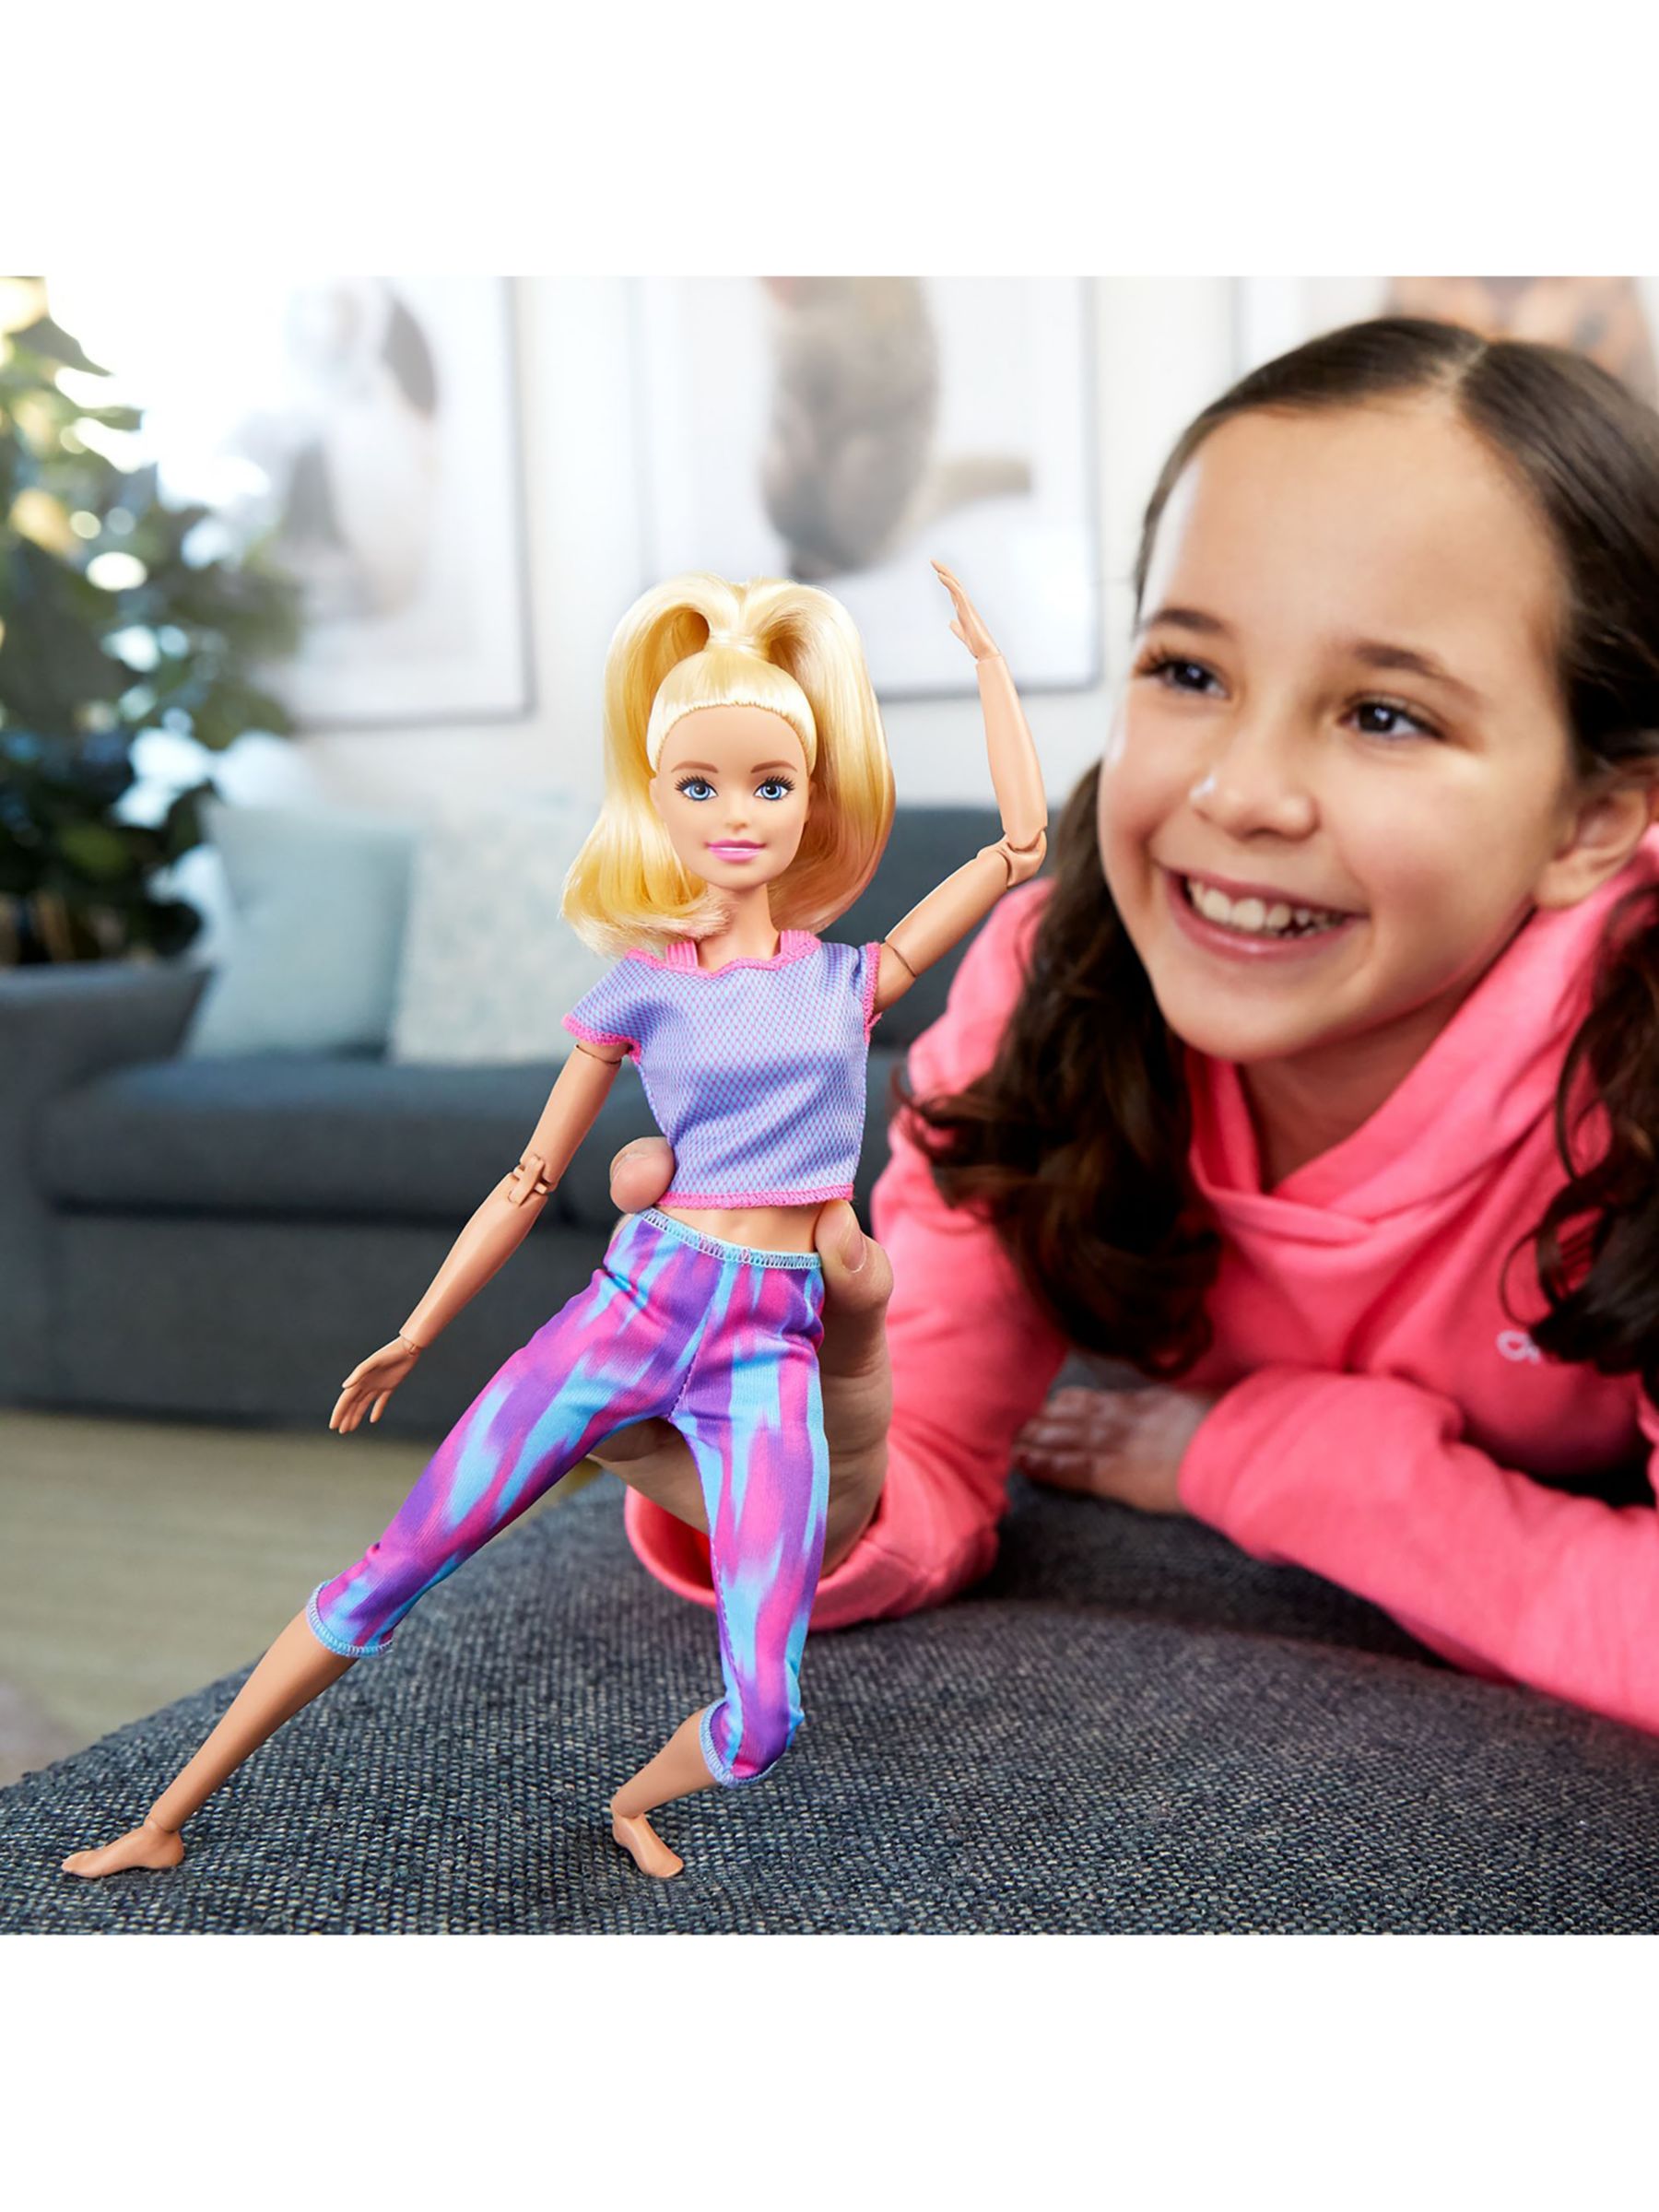 NEW 2021 Yoga Made to Move Barbie Skin-tone Comparison 